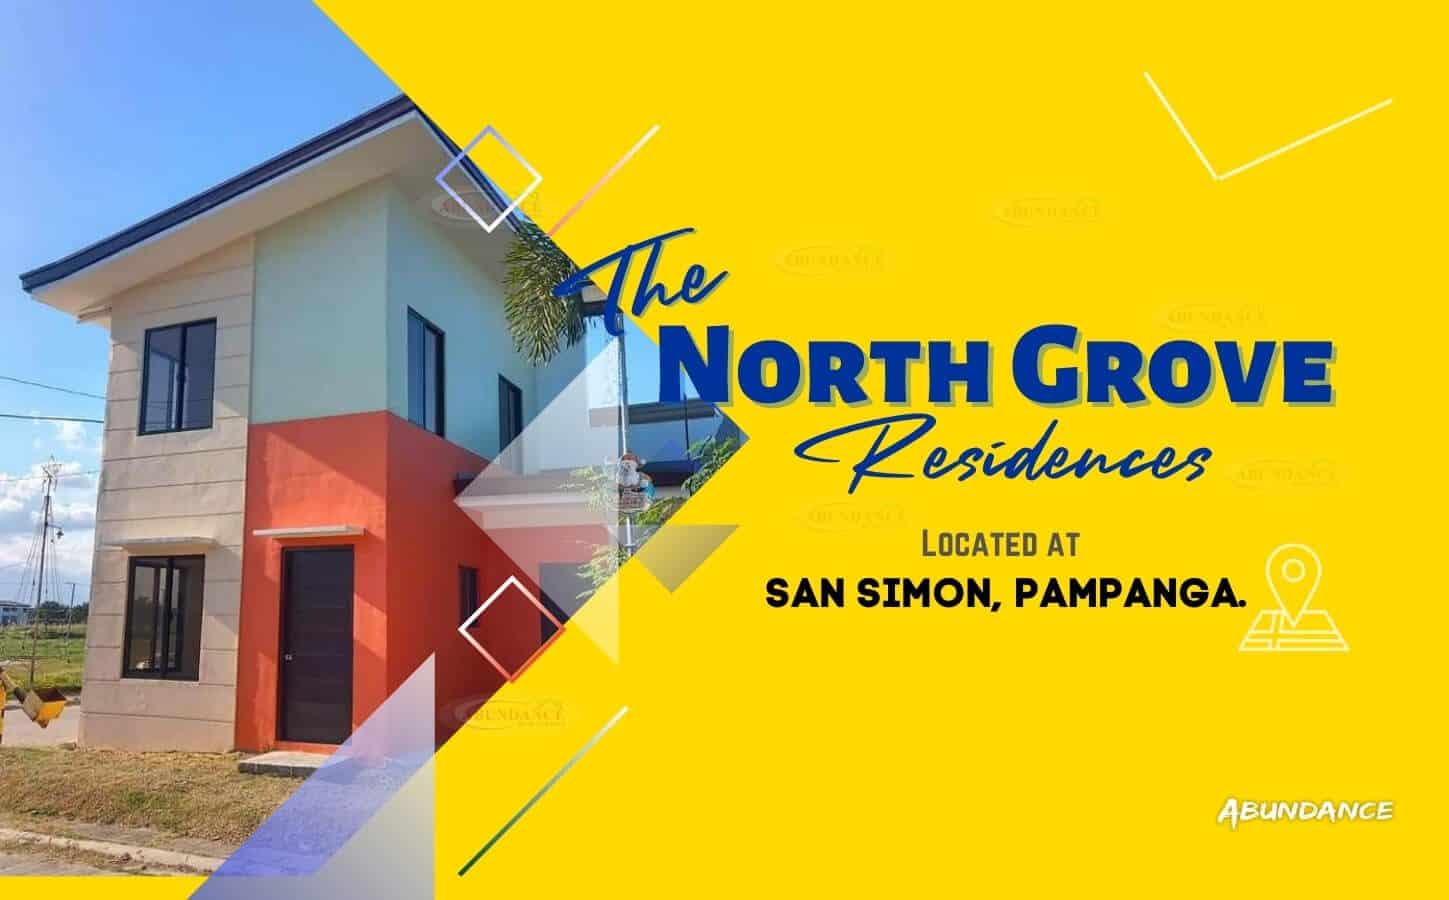 North grove residences Pampanga